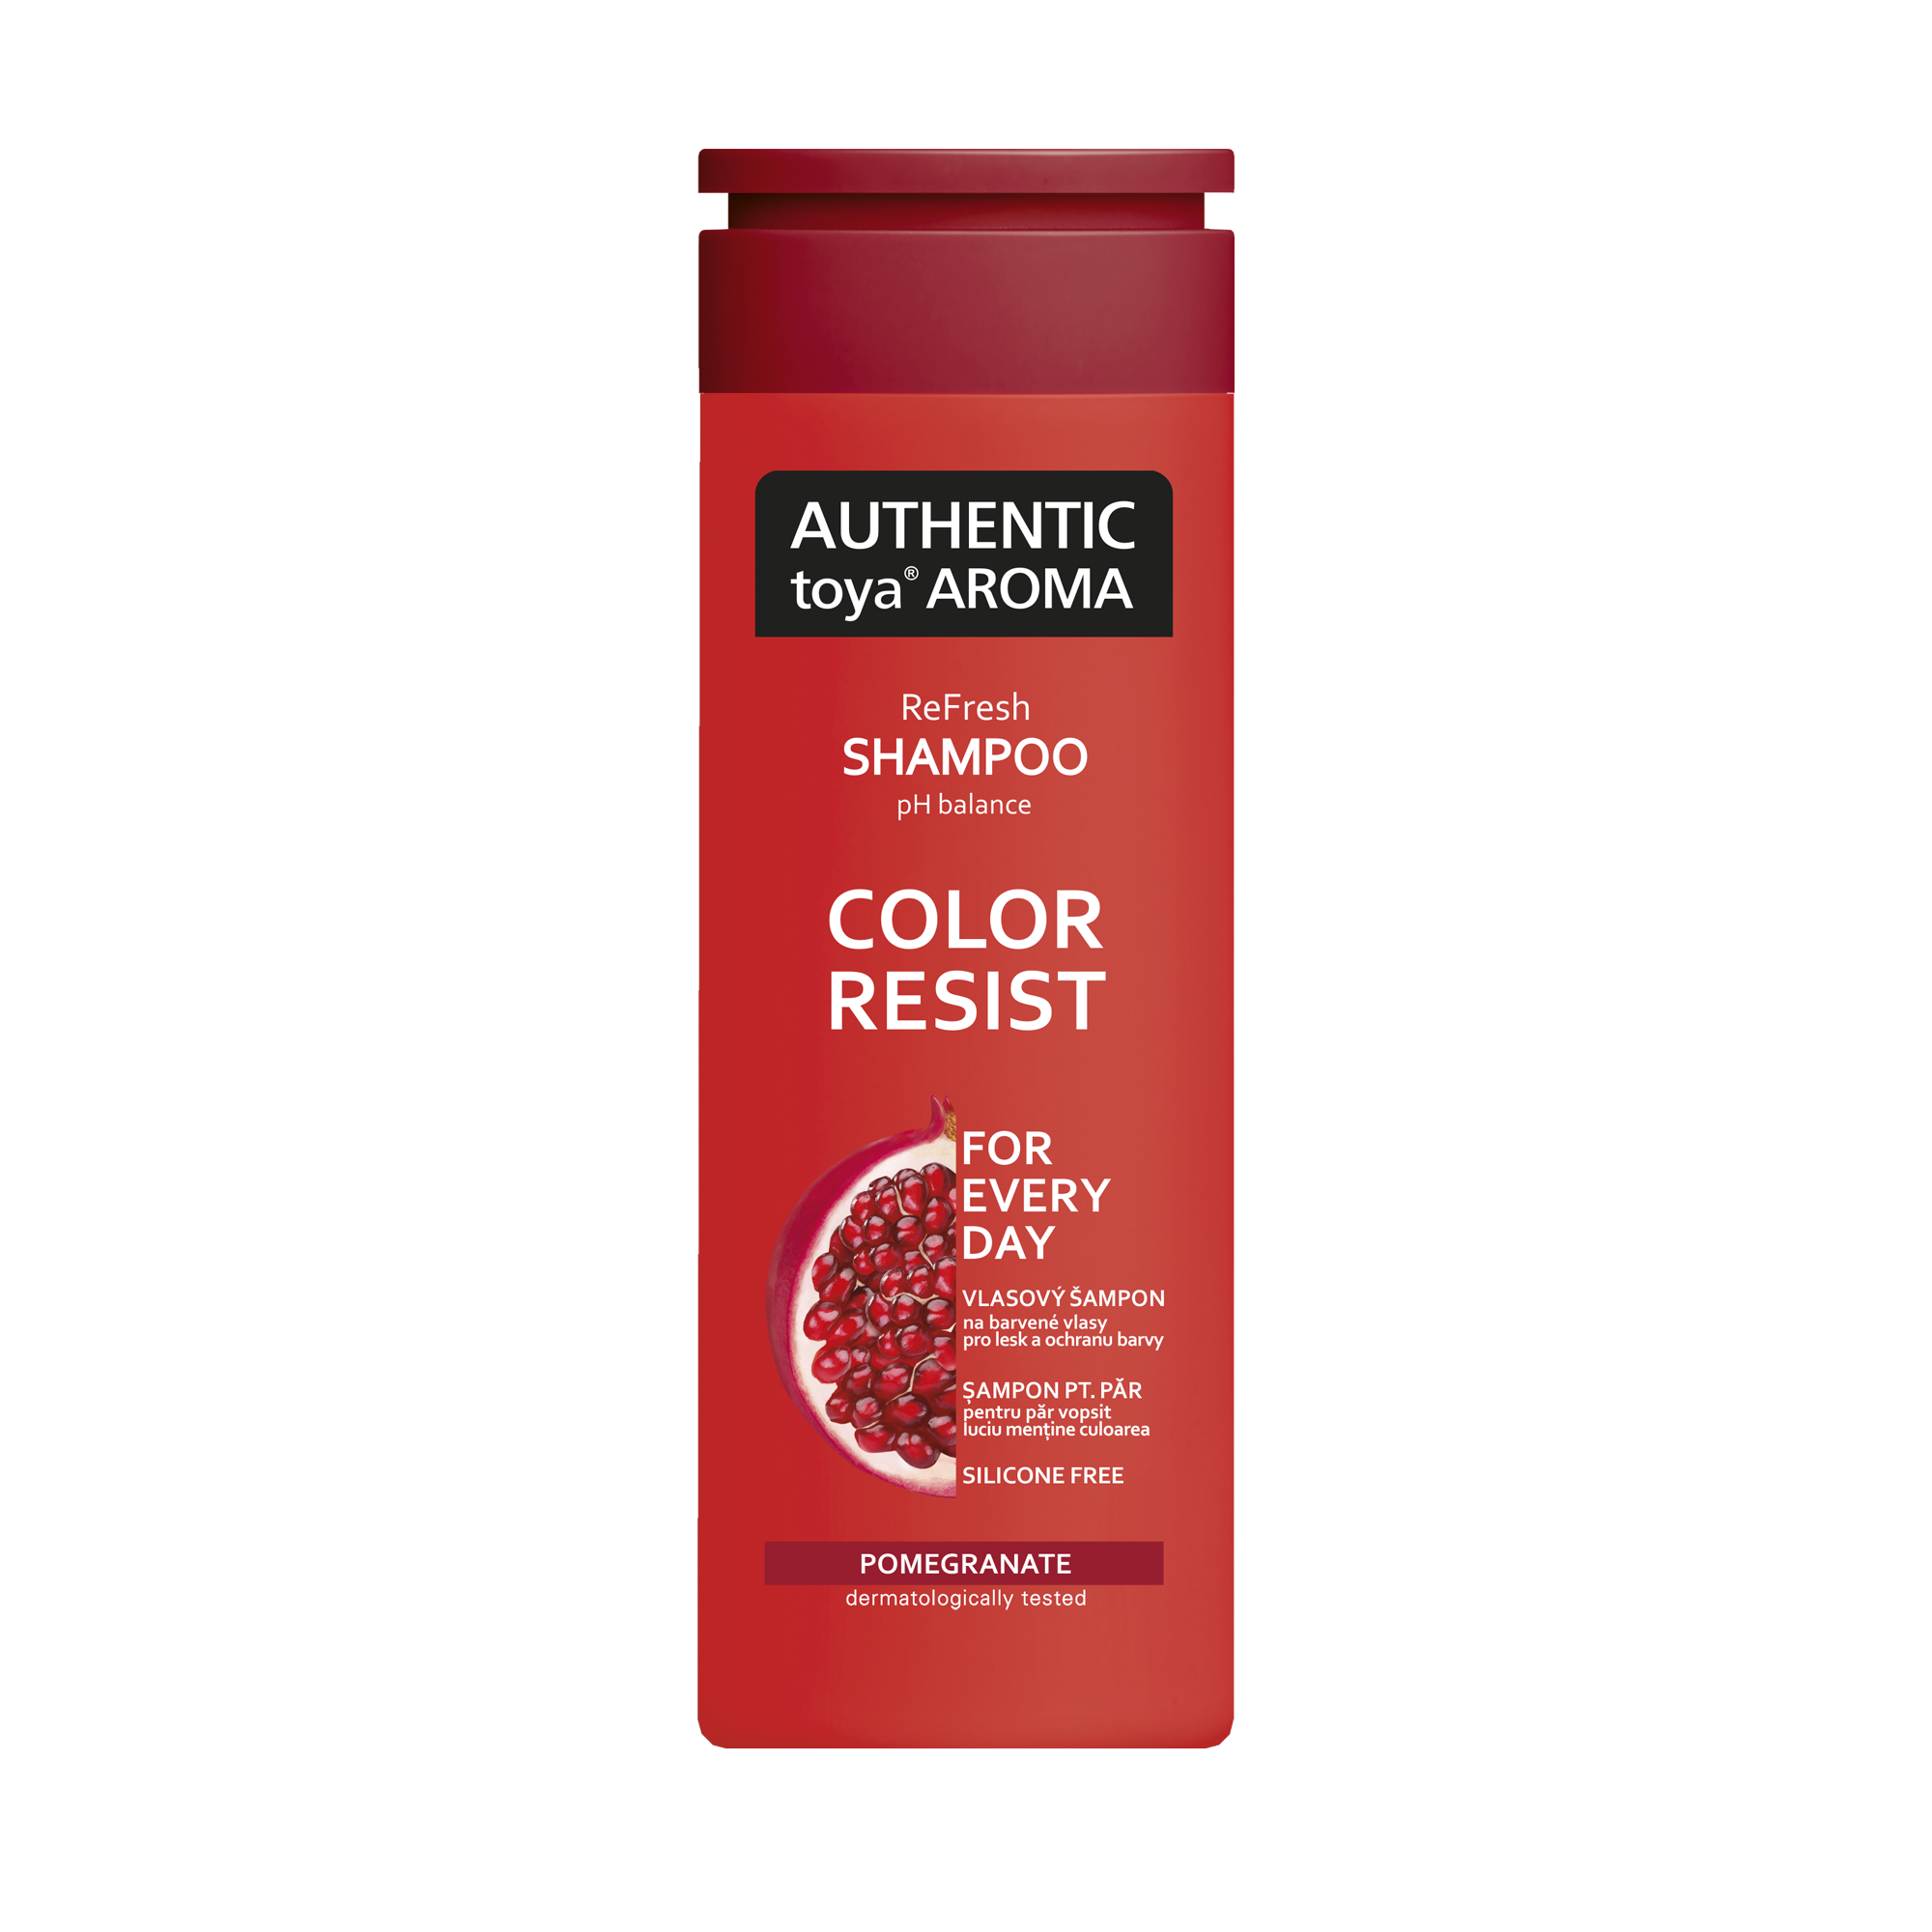 AUTHENTIC toya AROMA Color Resist shampoo